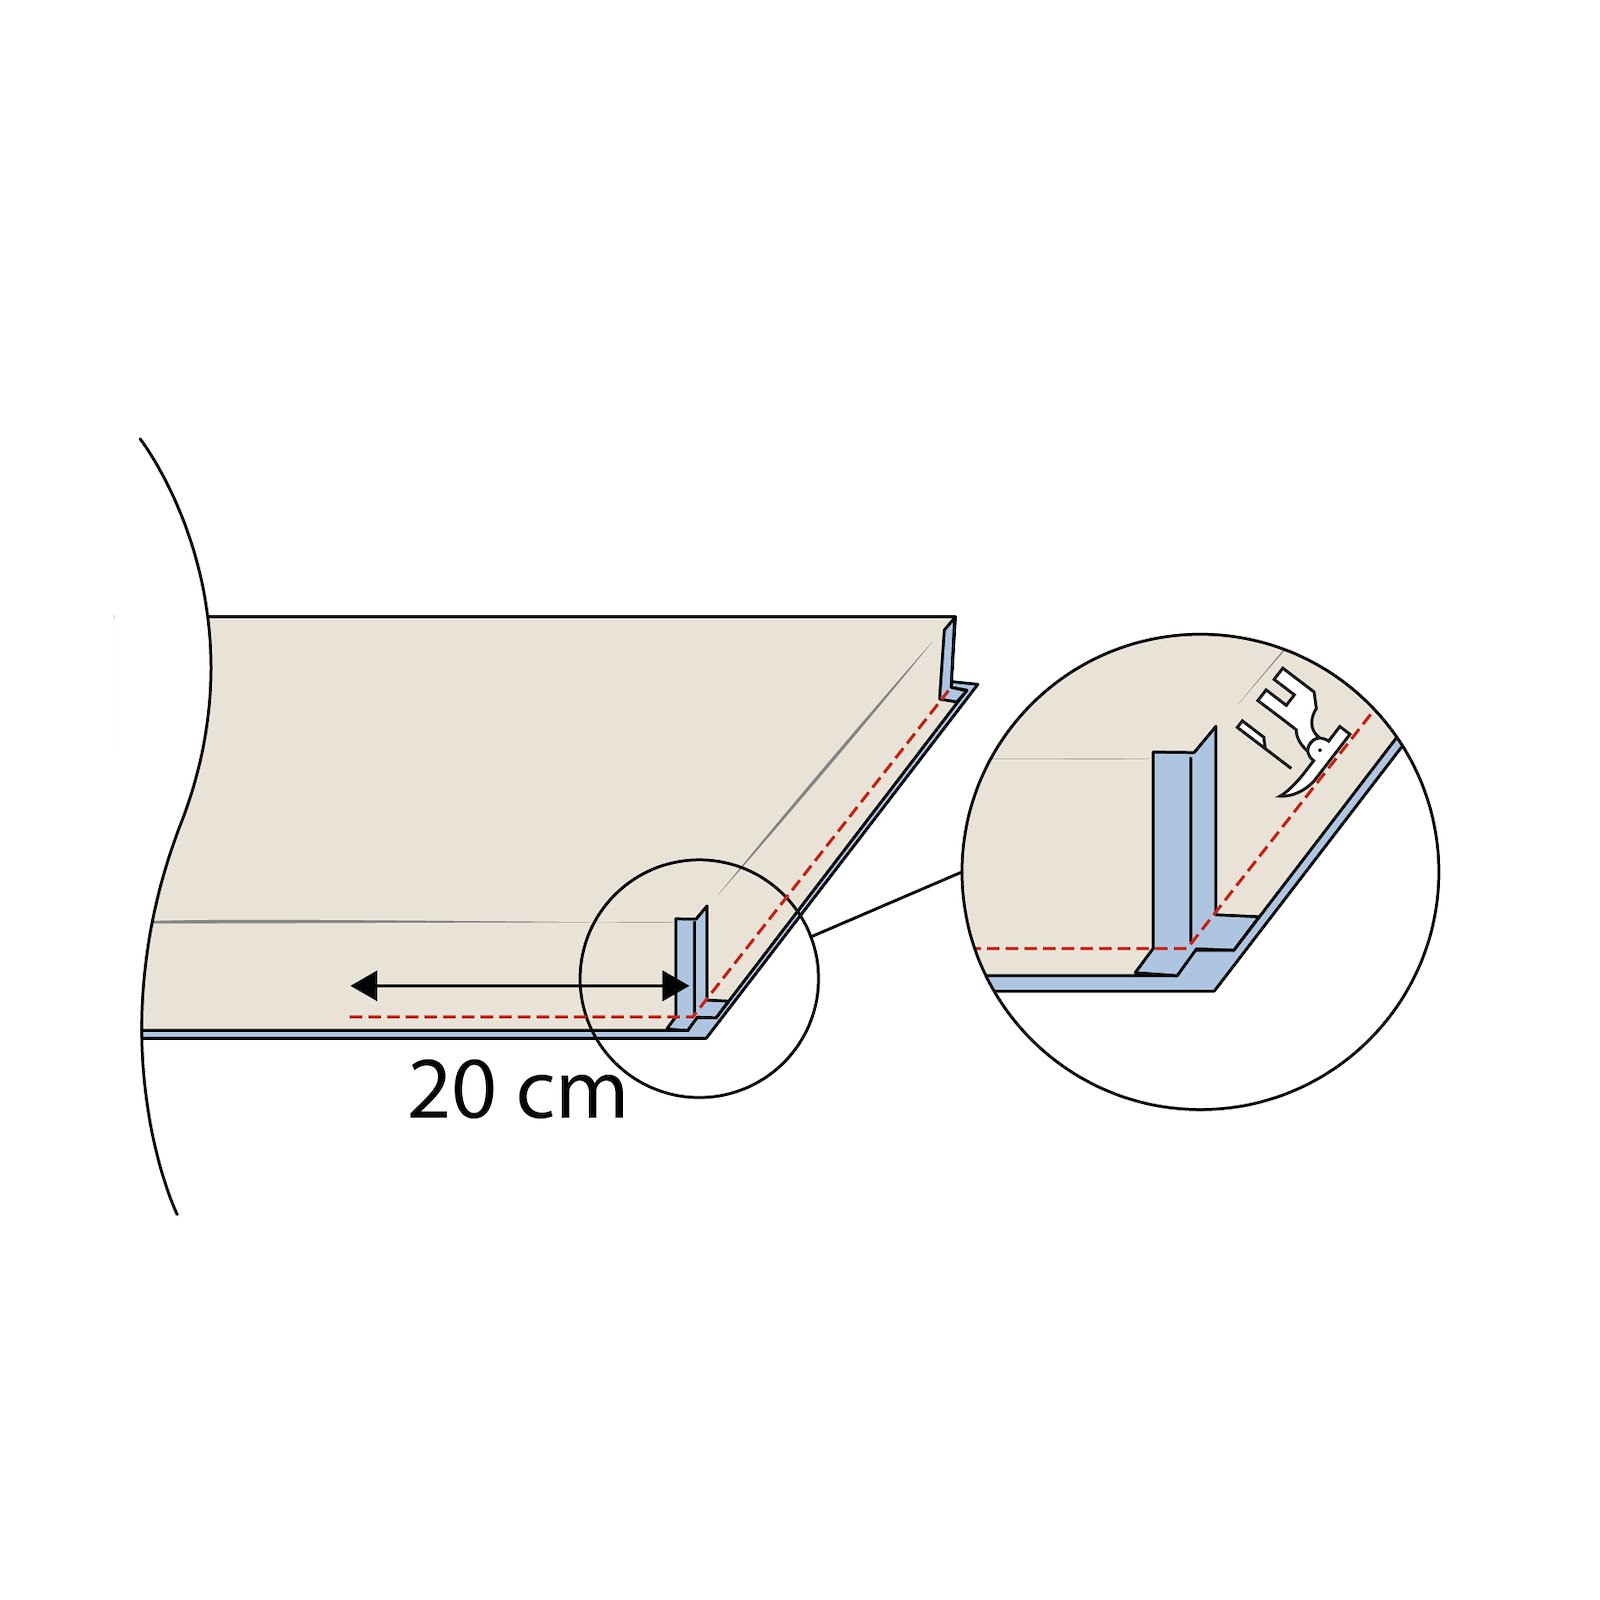 Sewing pattern: Crib bumper Diy3004-step4.jpg